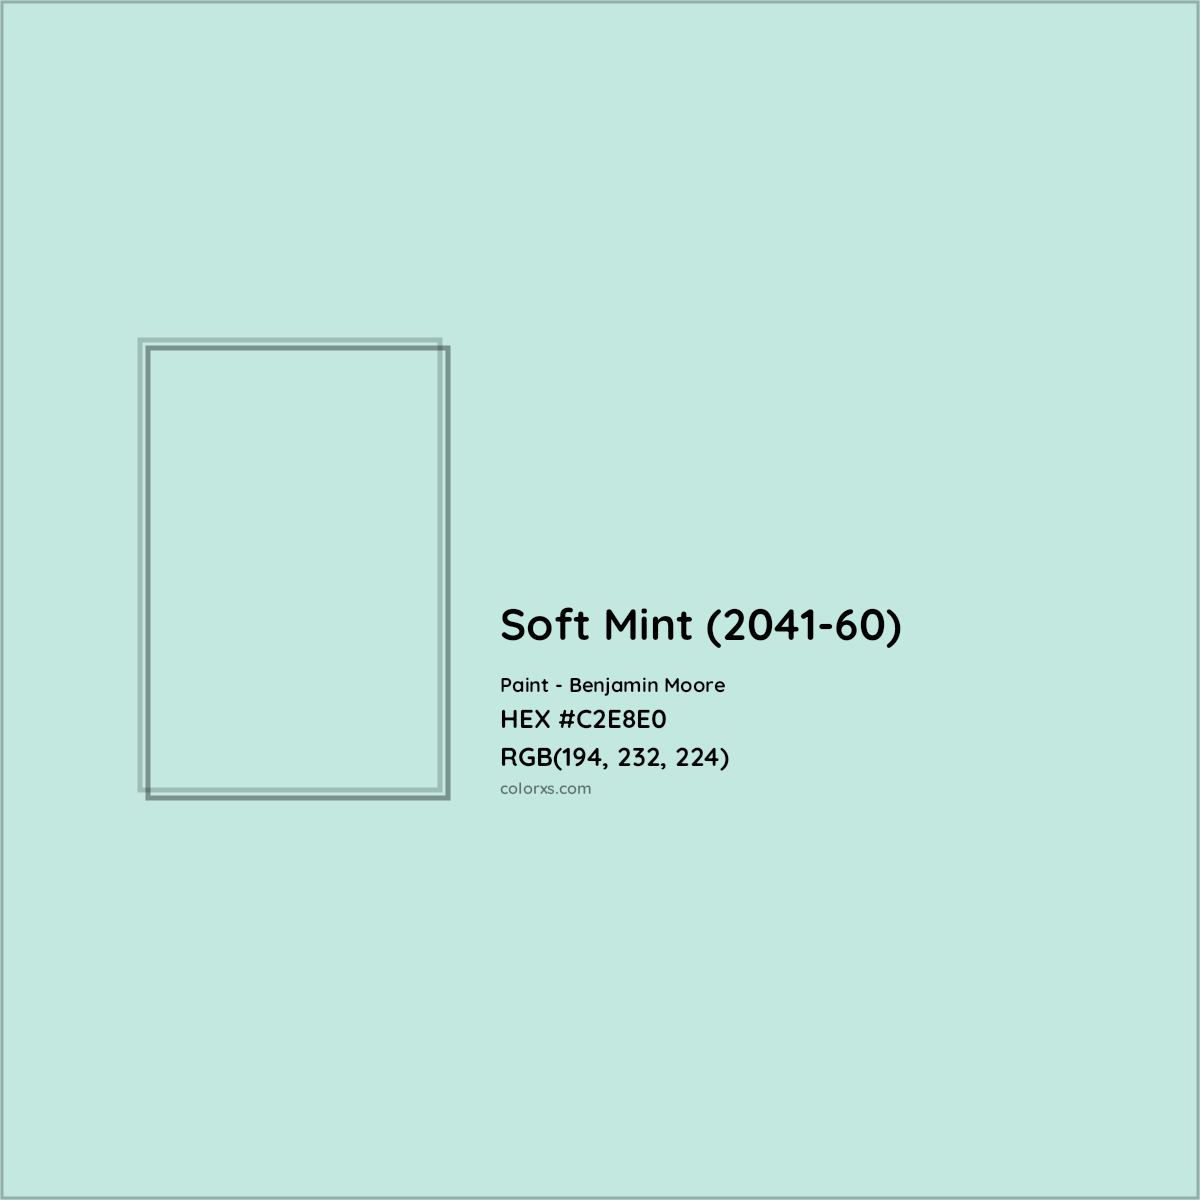 HEX #C2E8E0 Soft Mint (2041-60) Paint Benjamin Moore - Color Code